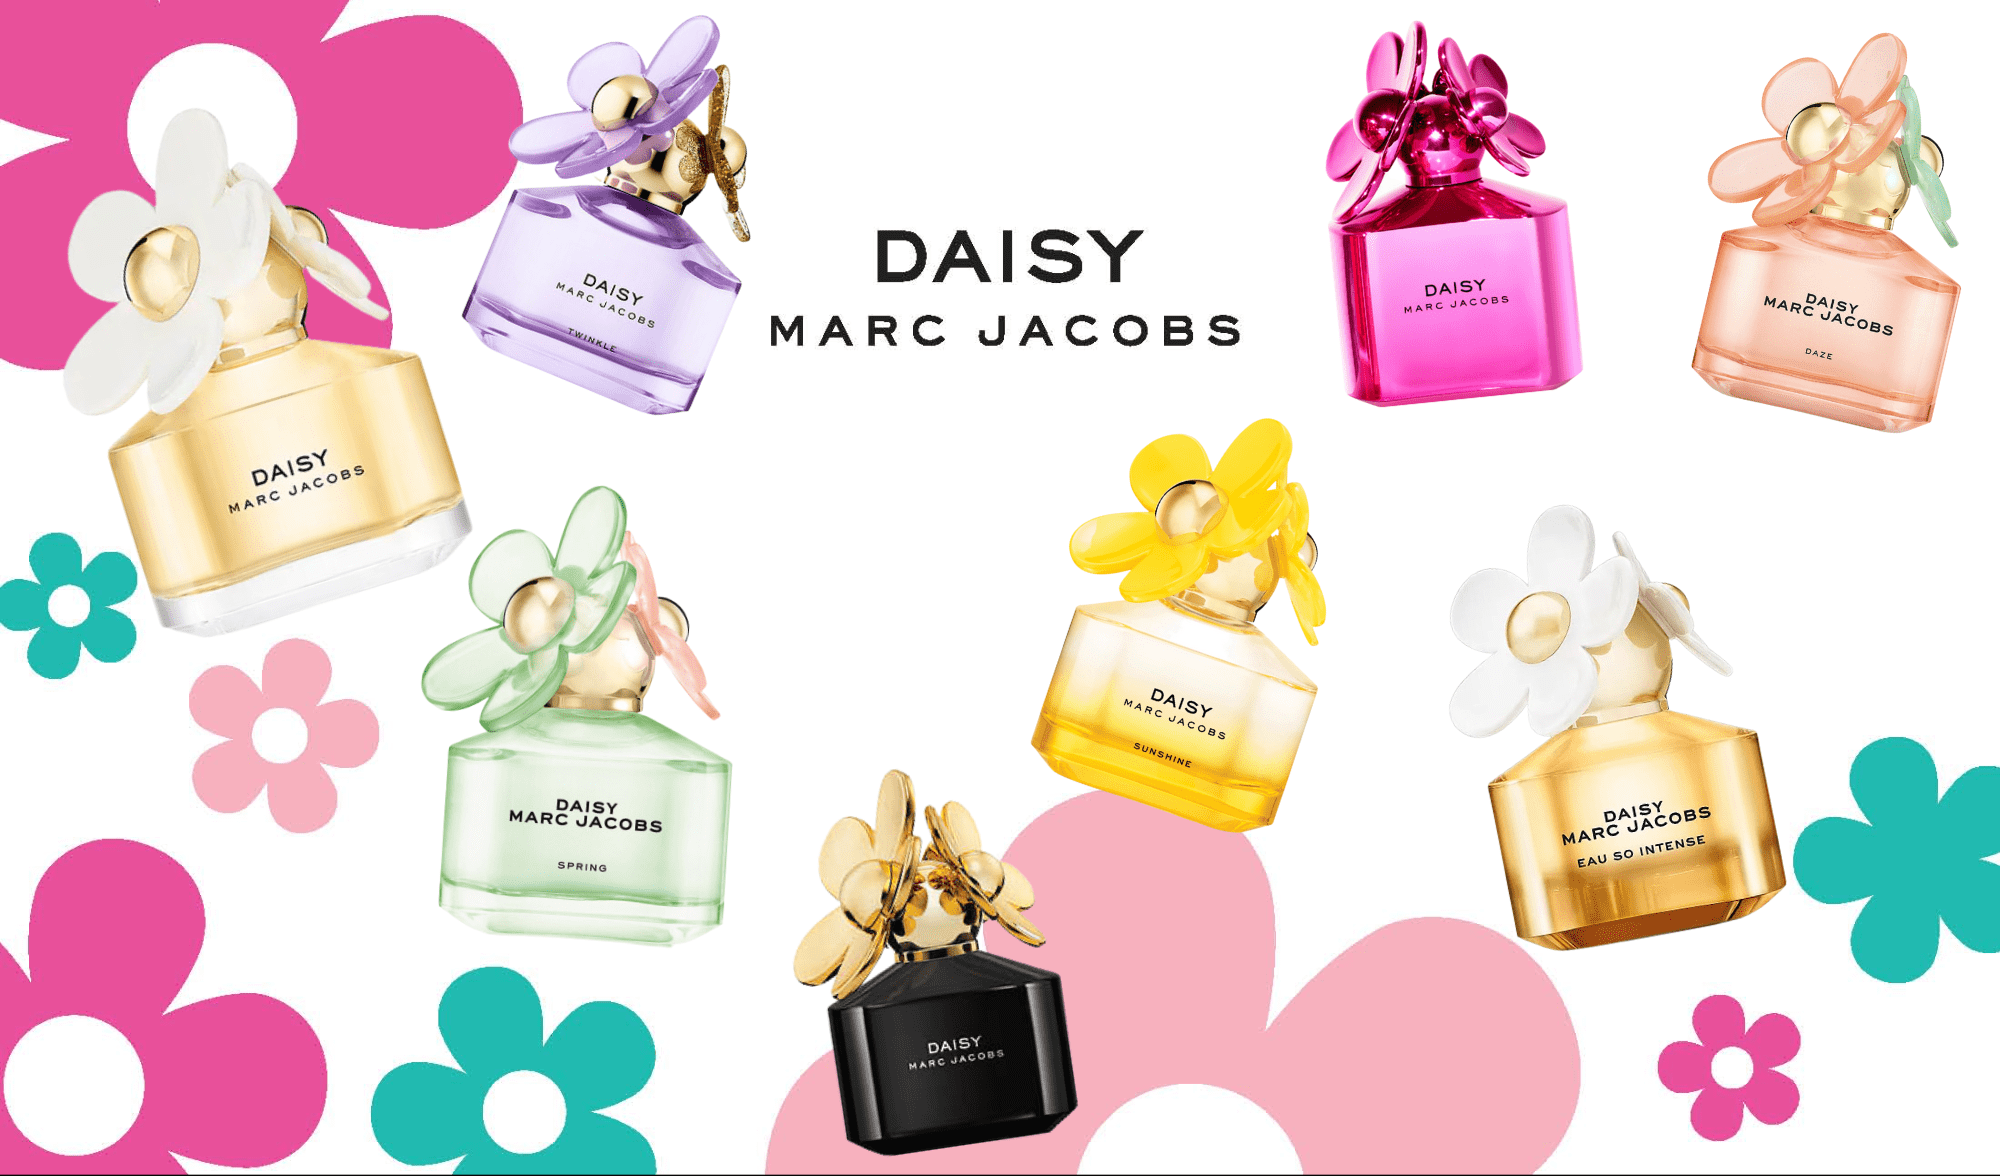 Der ultimative Leitfaden für jedes Marc Jacobs Daisy Parfum